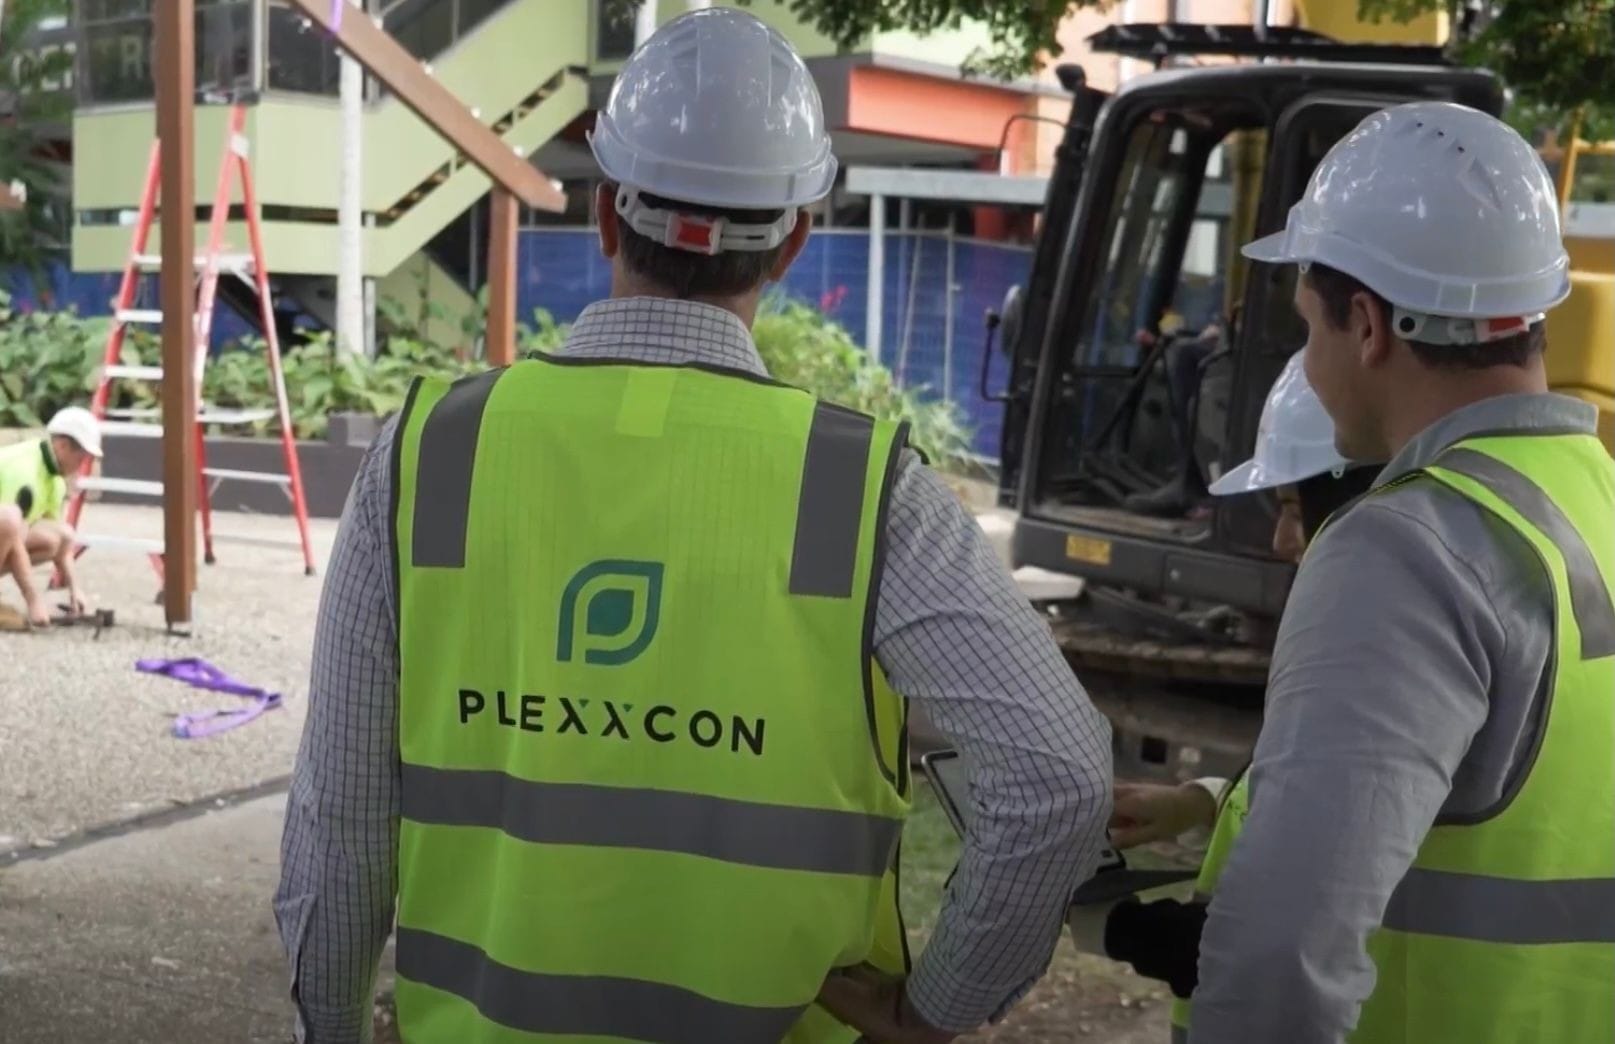 Plexxcon Commercial Construction